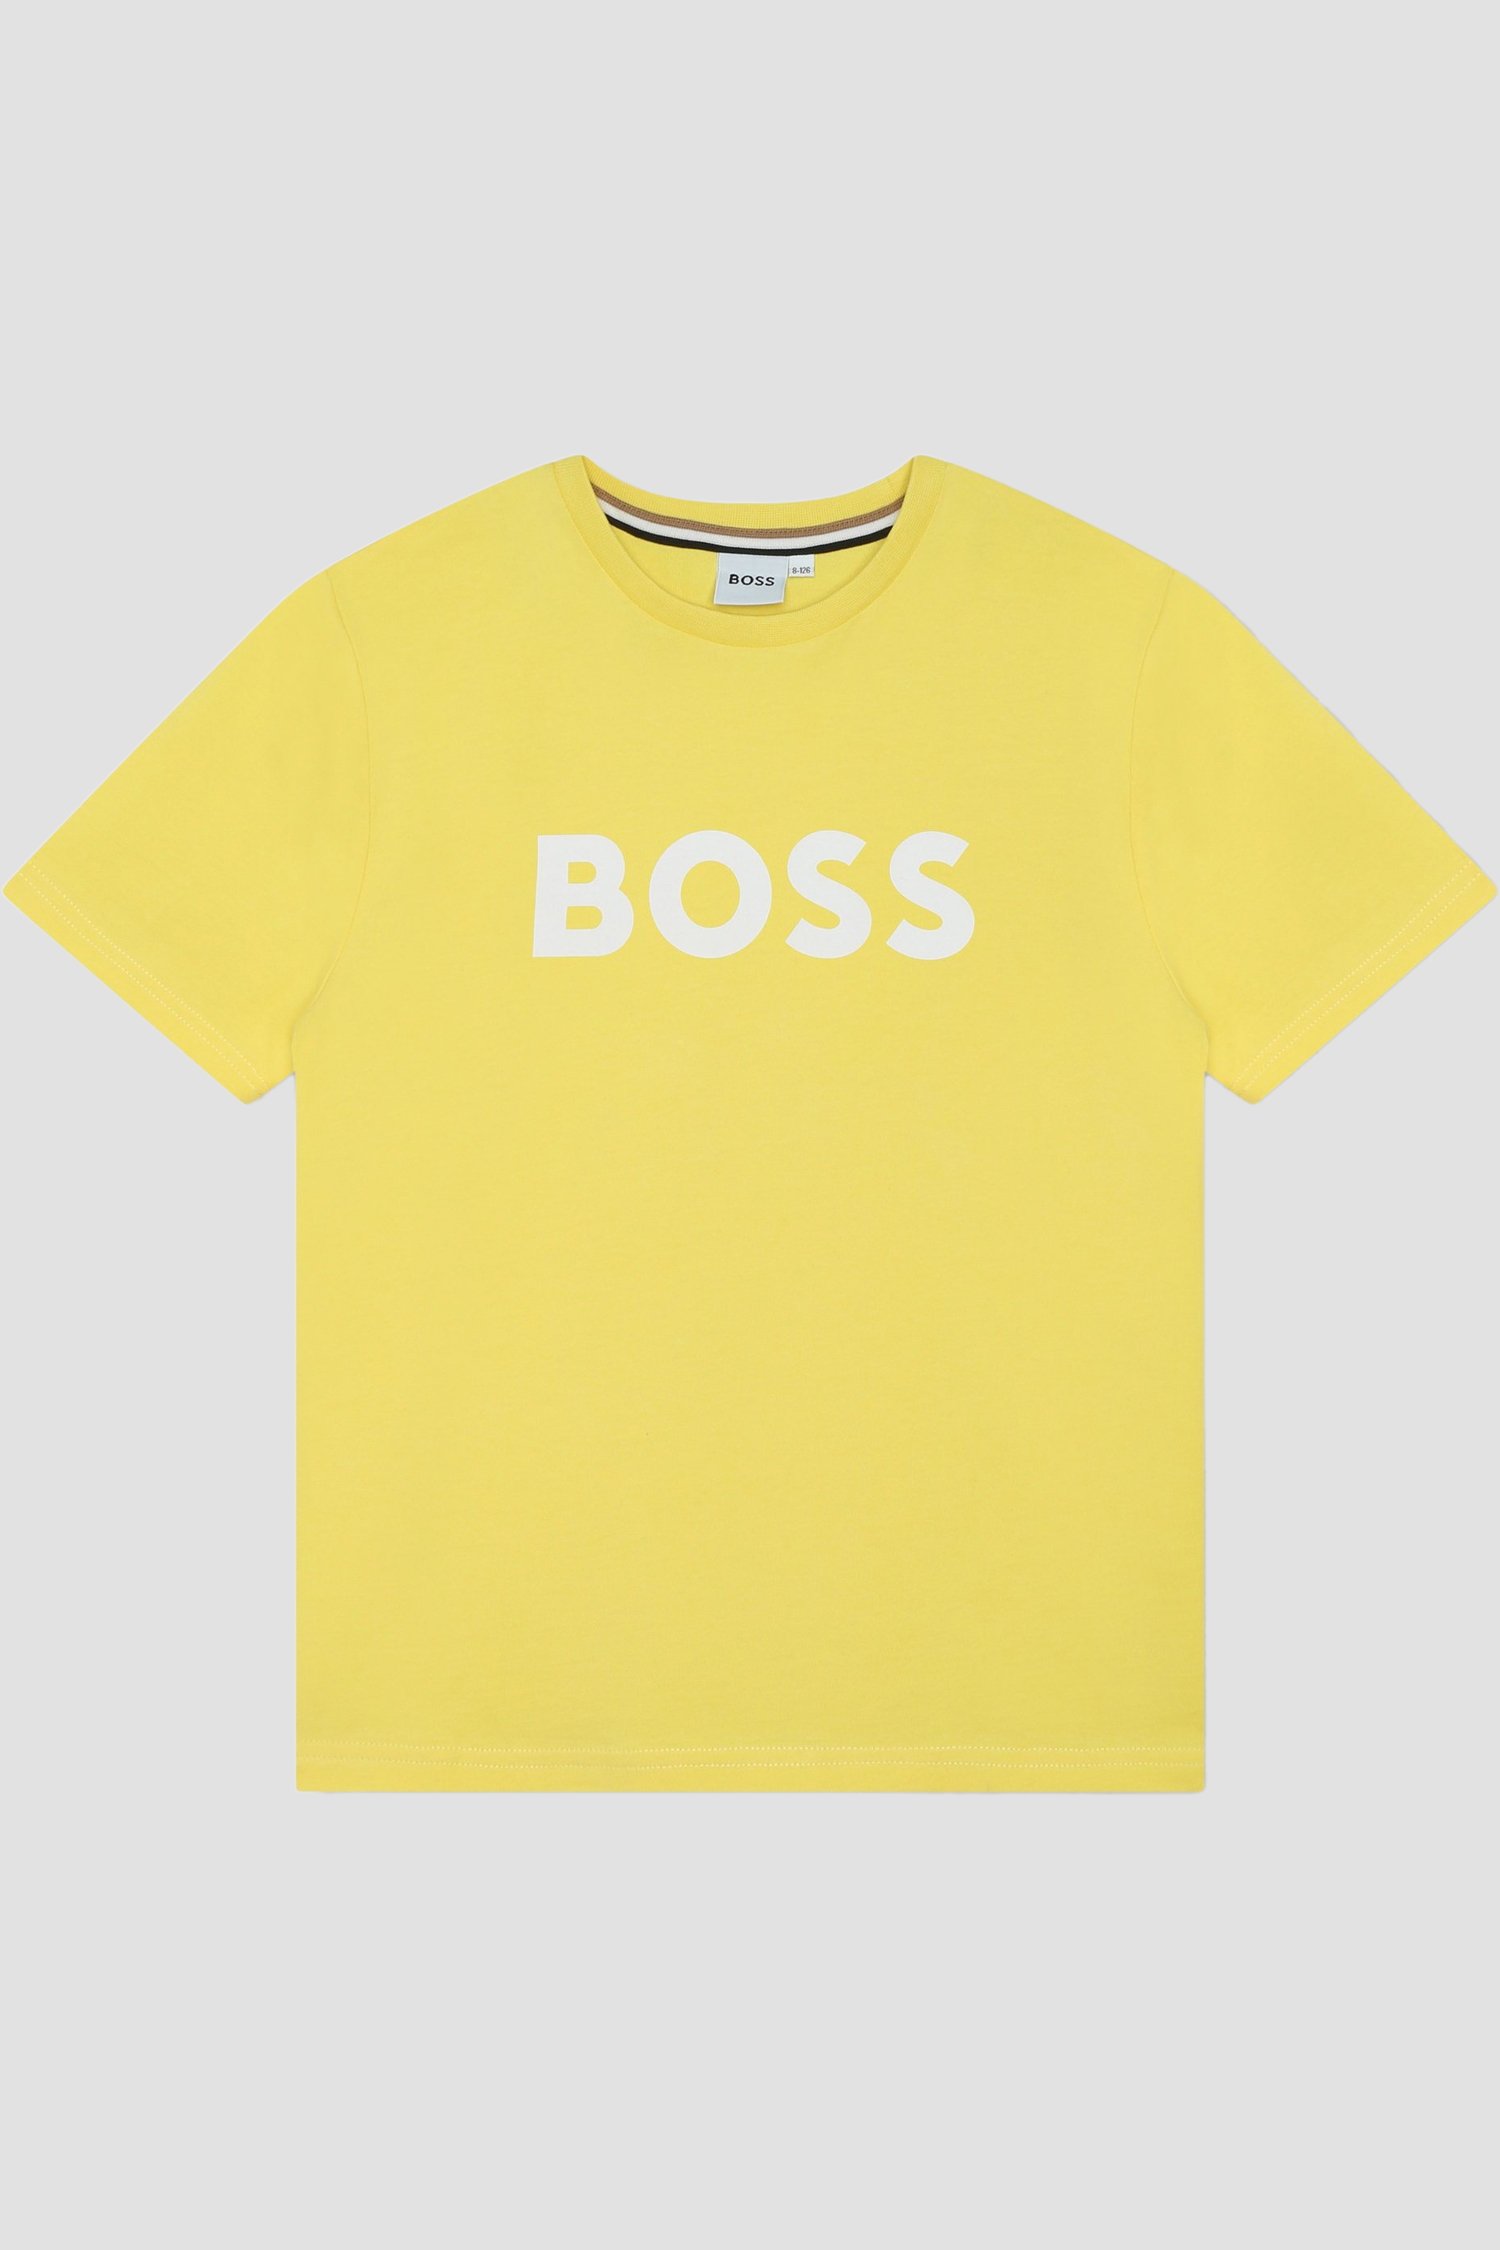 Детская желтая футболка BOSS kids J50718;508